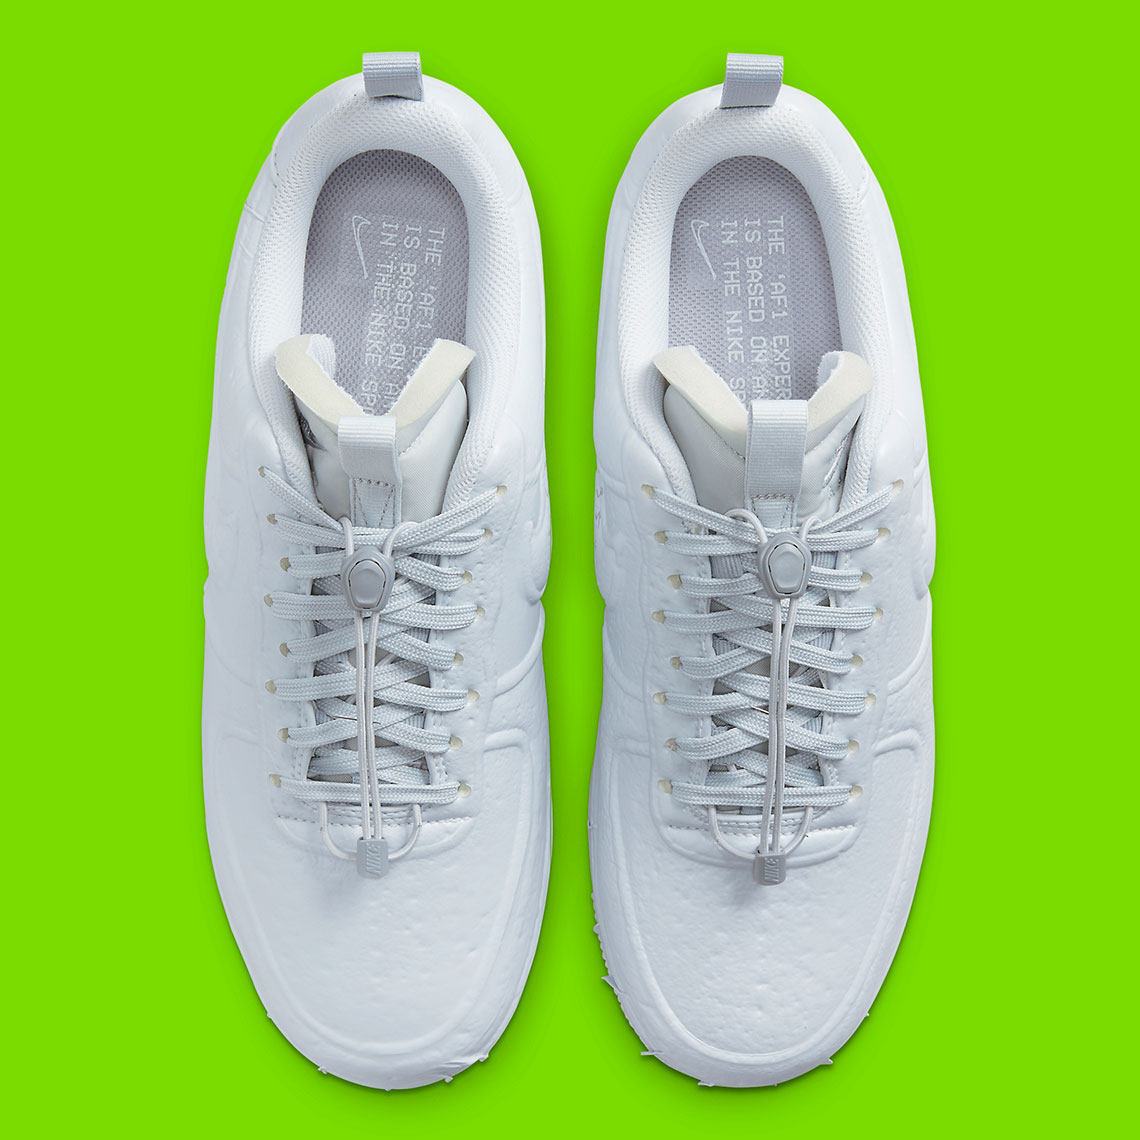 Nike Air Force 1 Experimental White Neon | SneakerNews.com